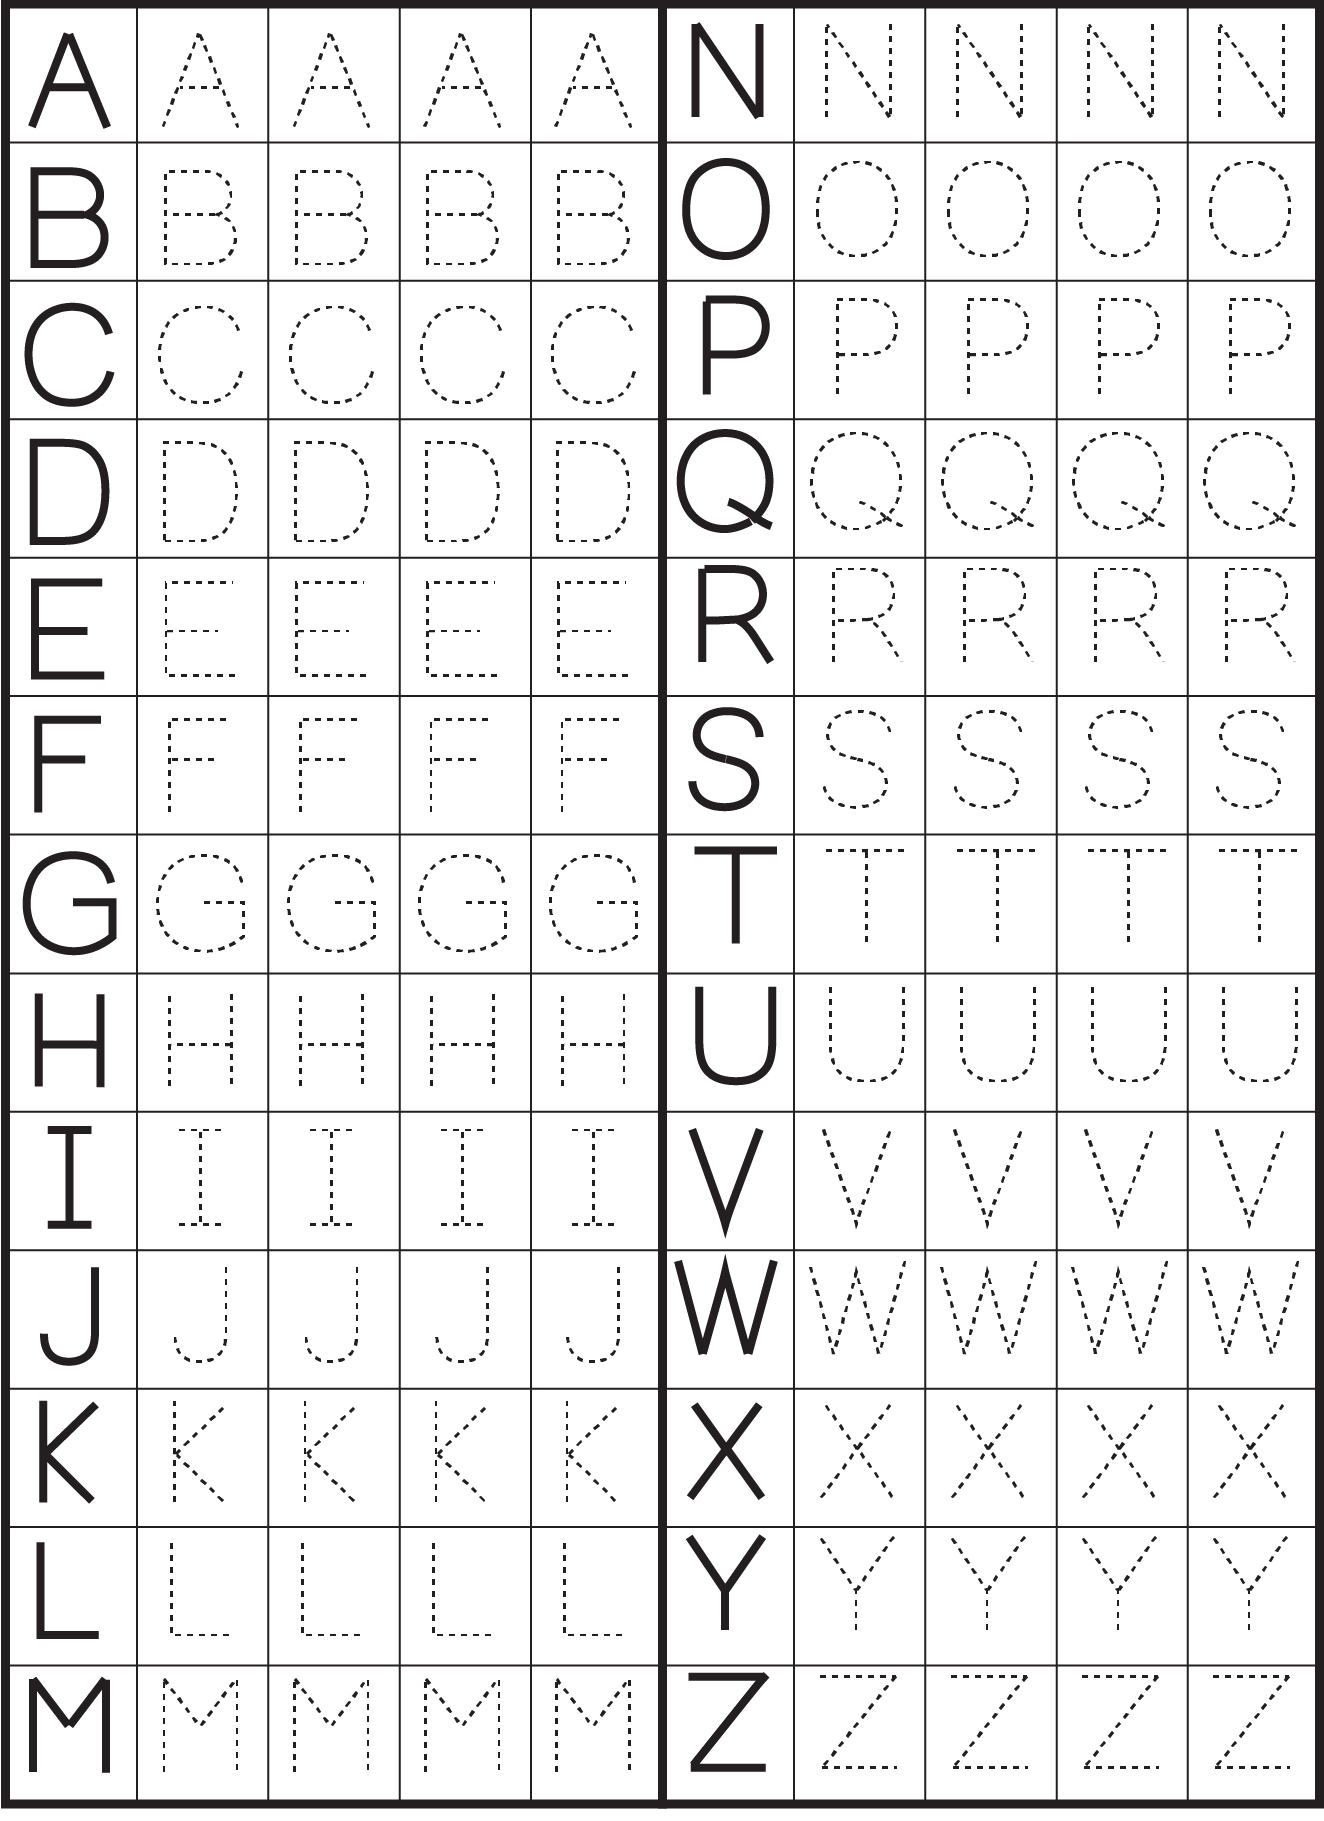 Worksheet Tracing Alphabet For Kindergarten Free Tripmart